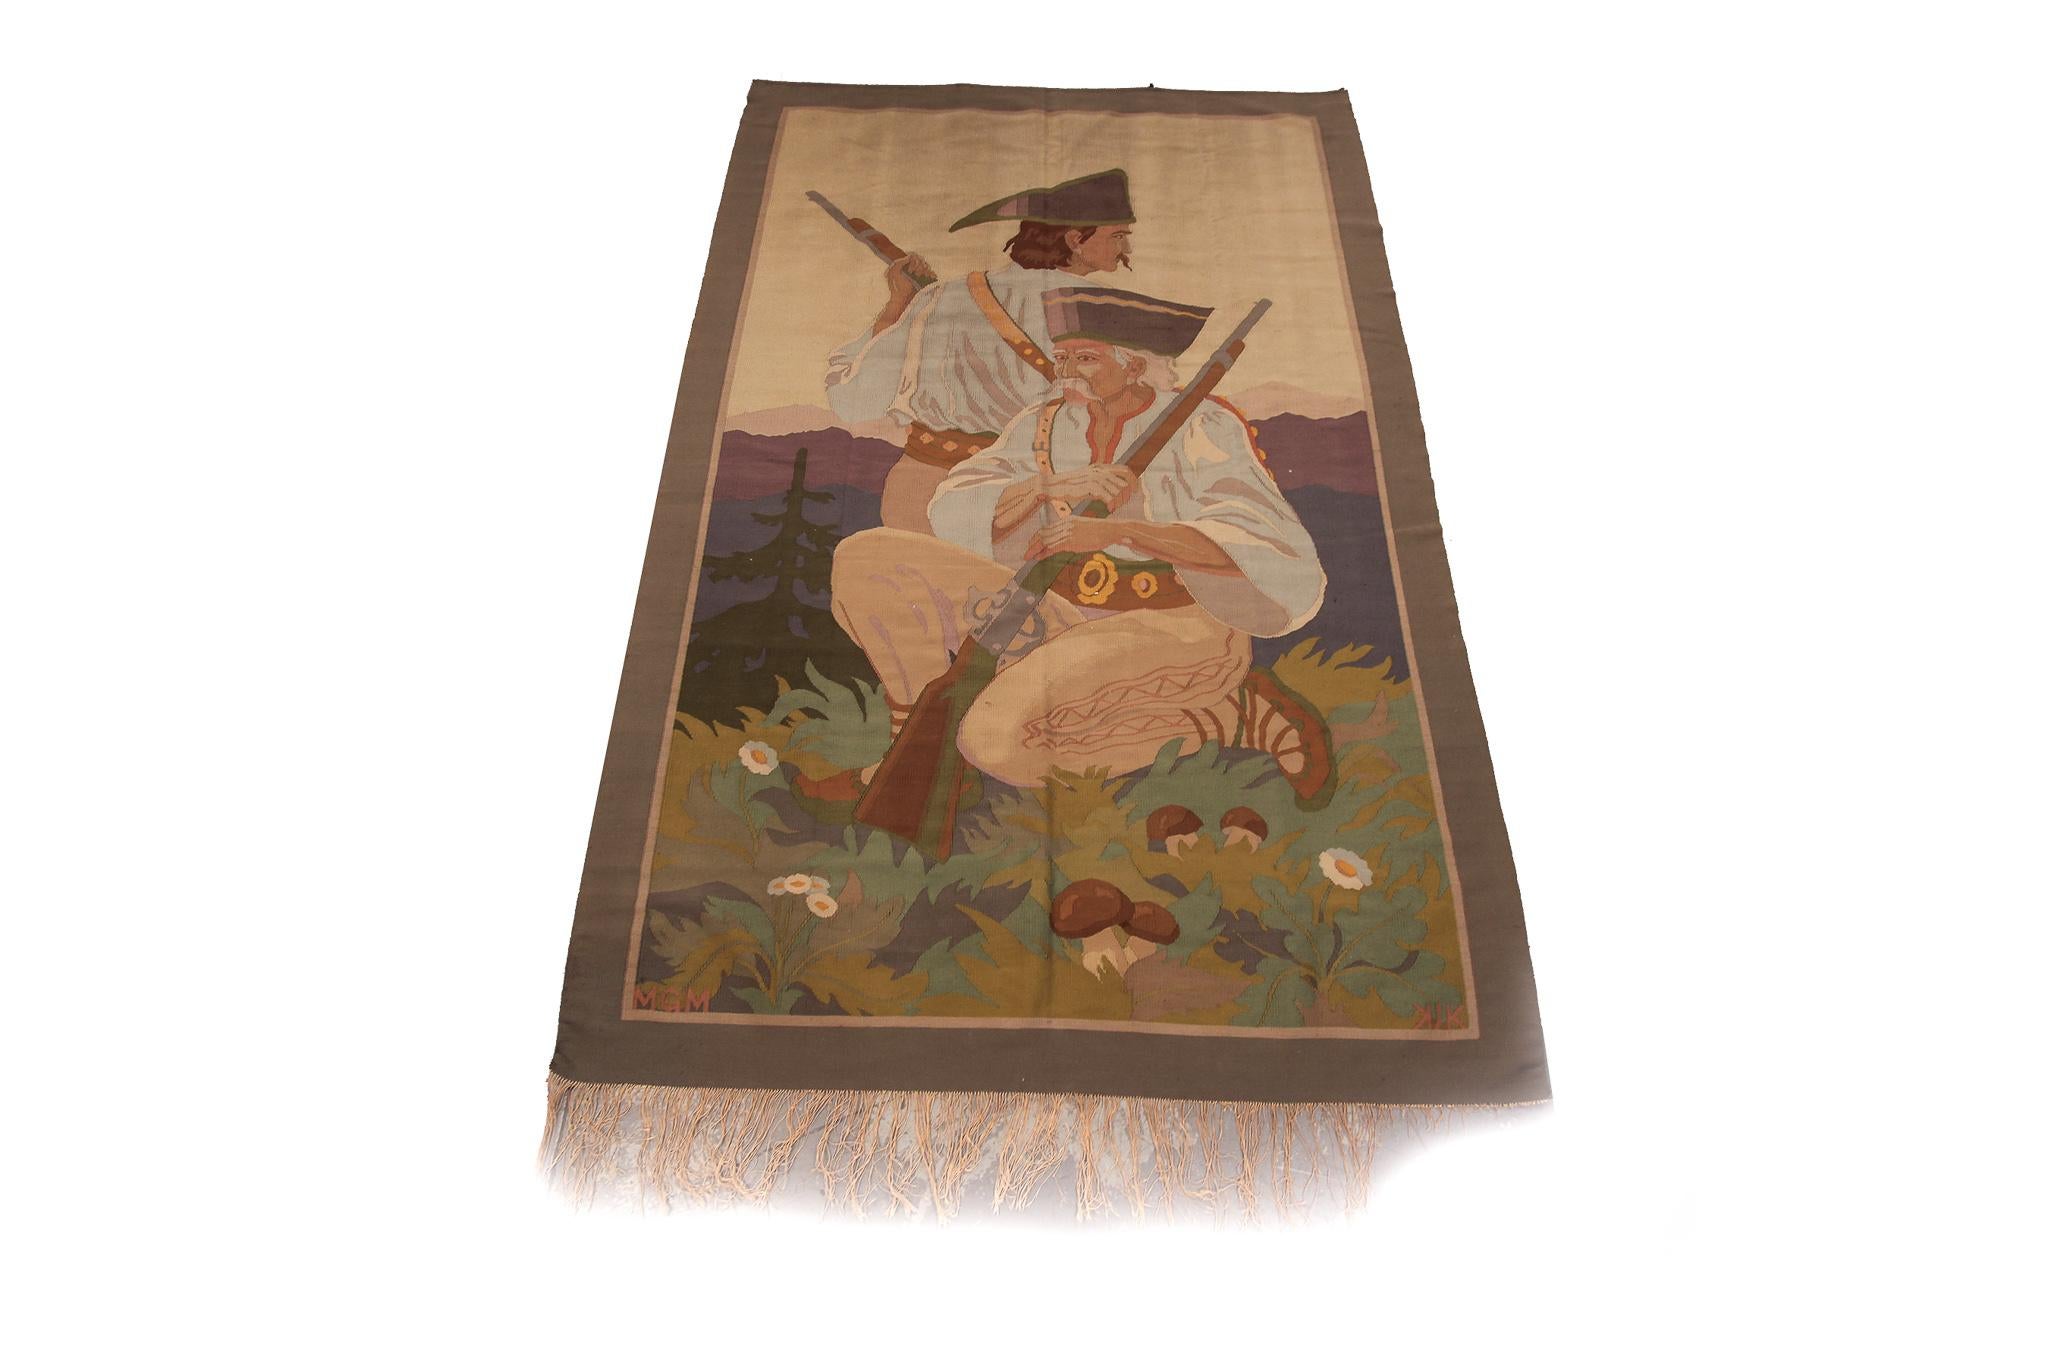 Rare Vintage Bessarabian Tapestry Signed Fine Tapestry Silk Foundation
4'7